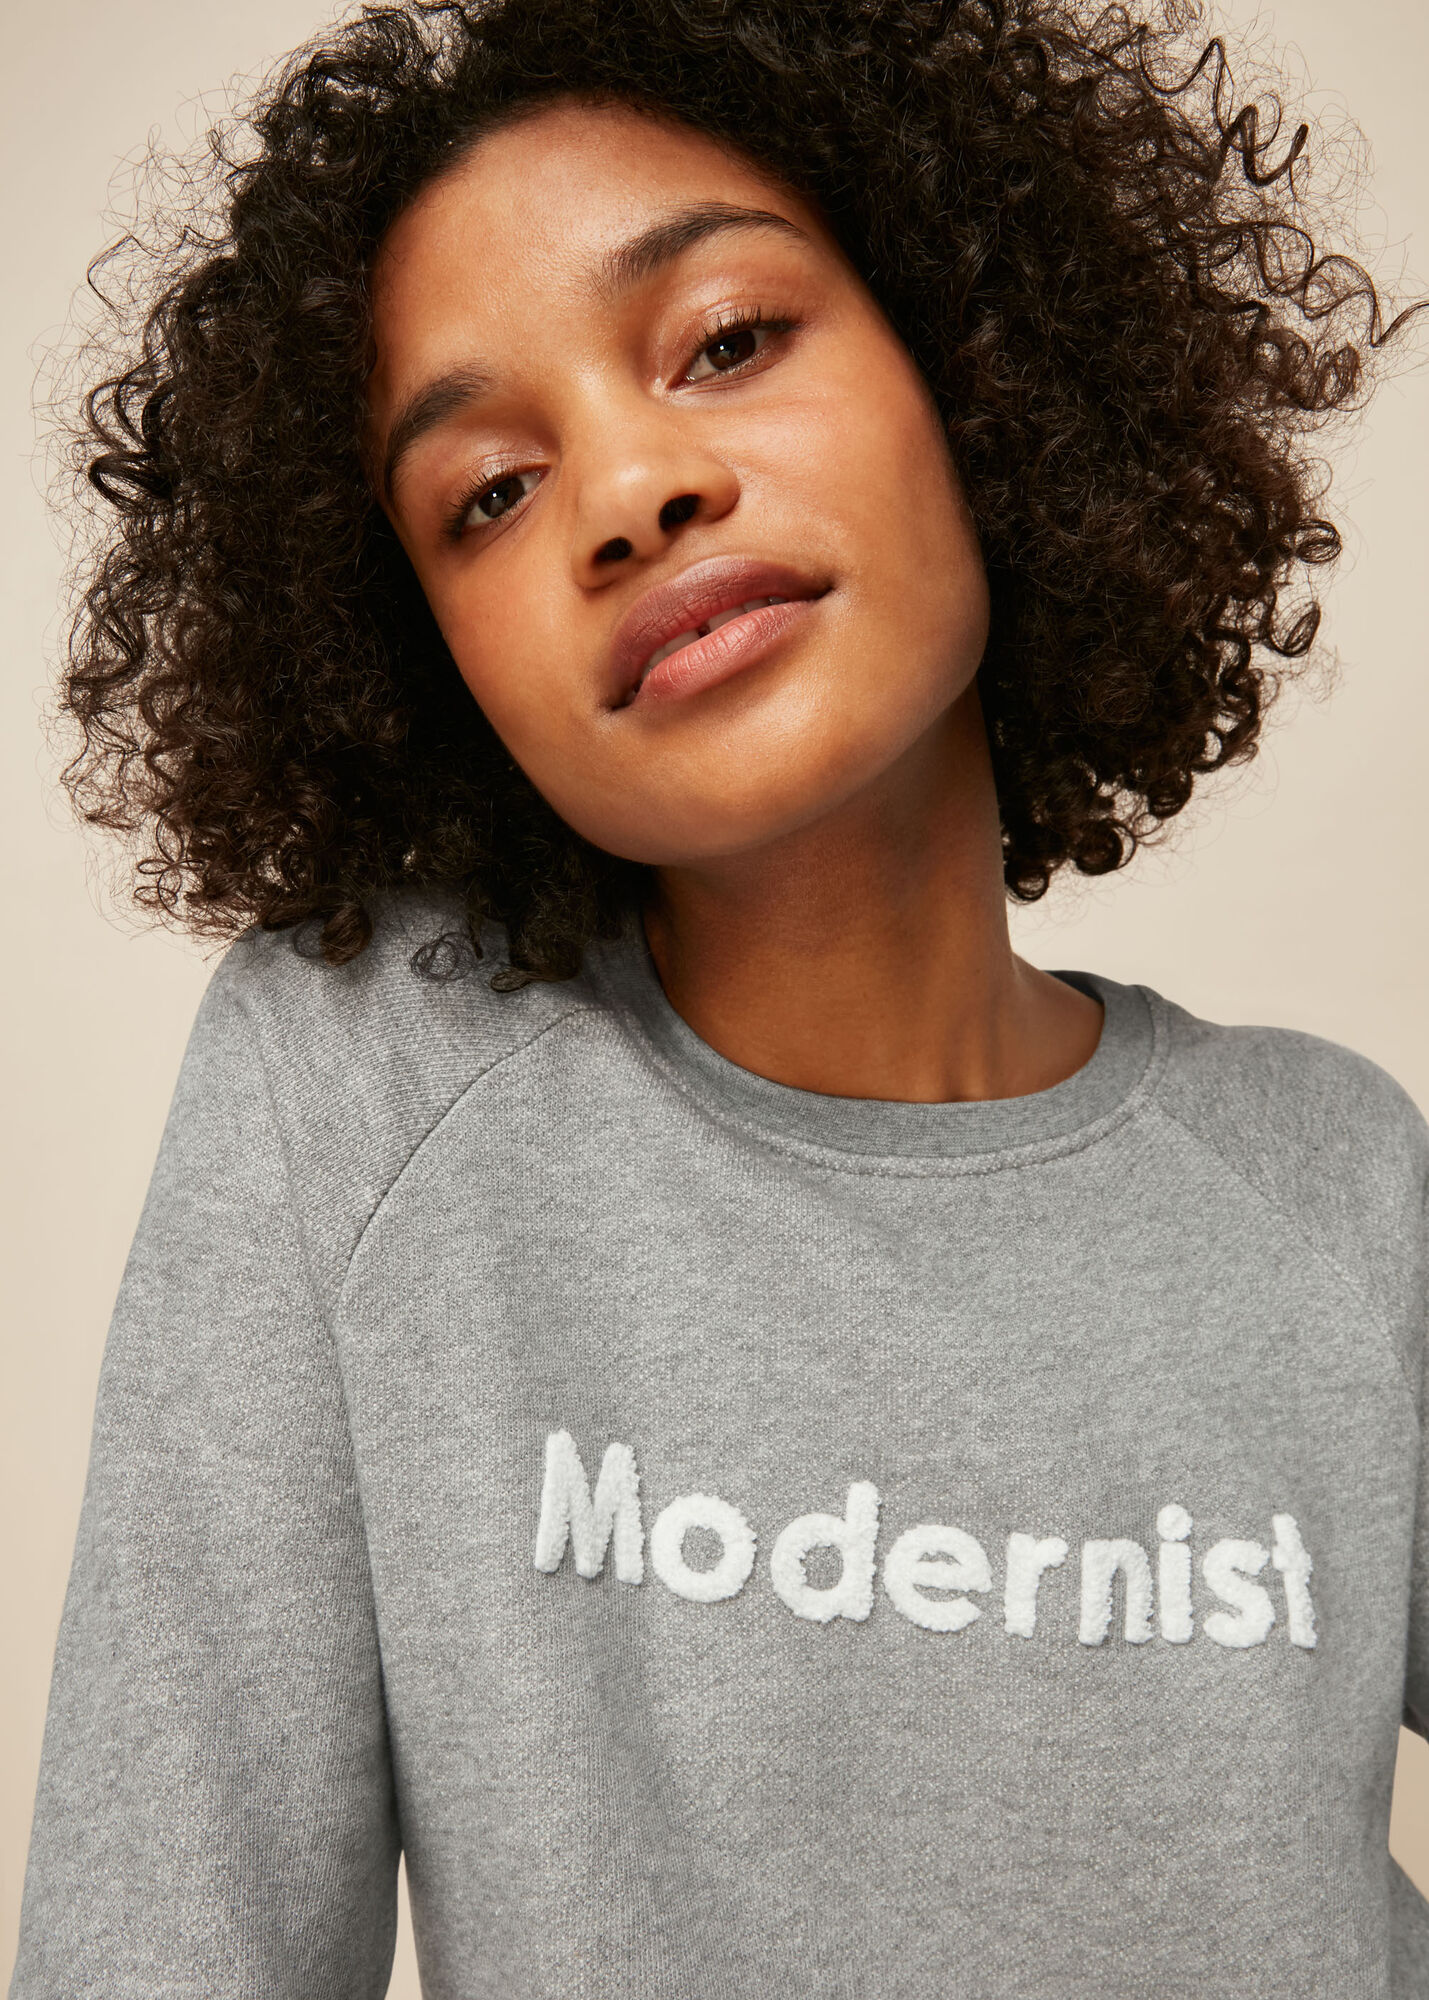 Grey Marl Modernist Logo Sweatshirt | WHISTLES